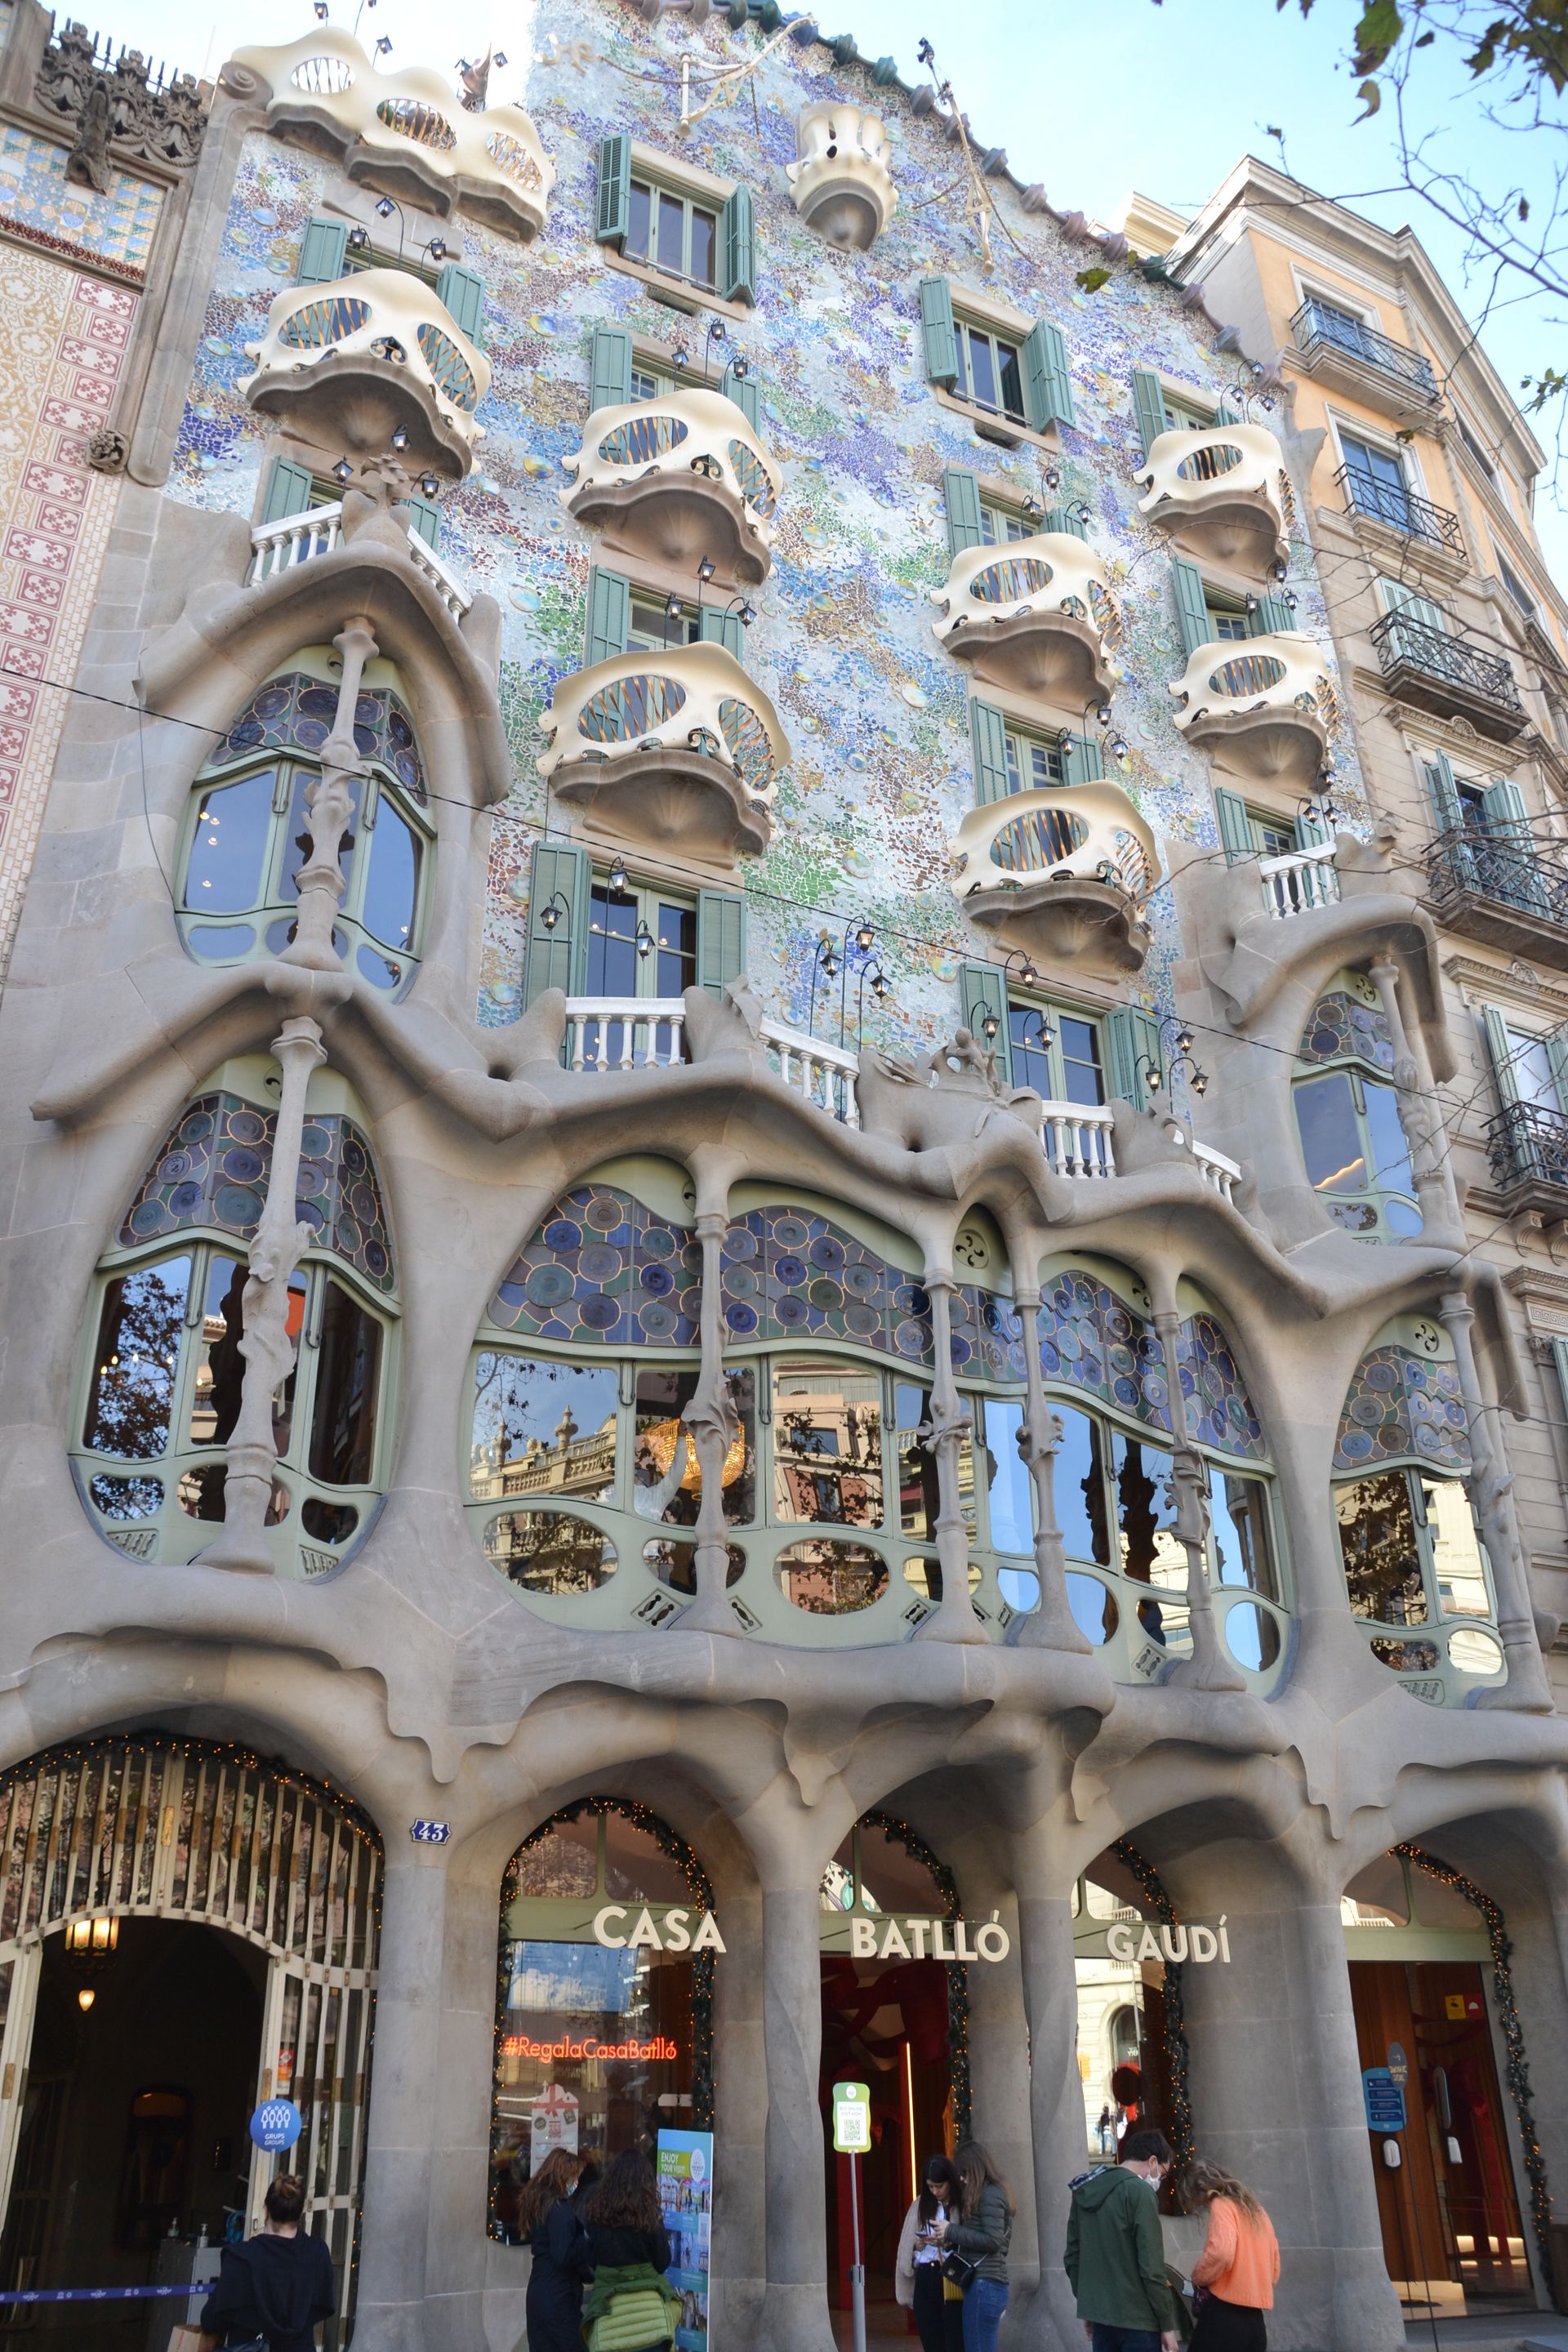 Casa Batllo Gaudi